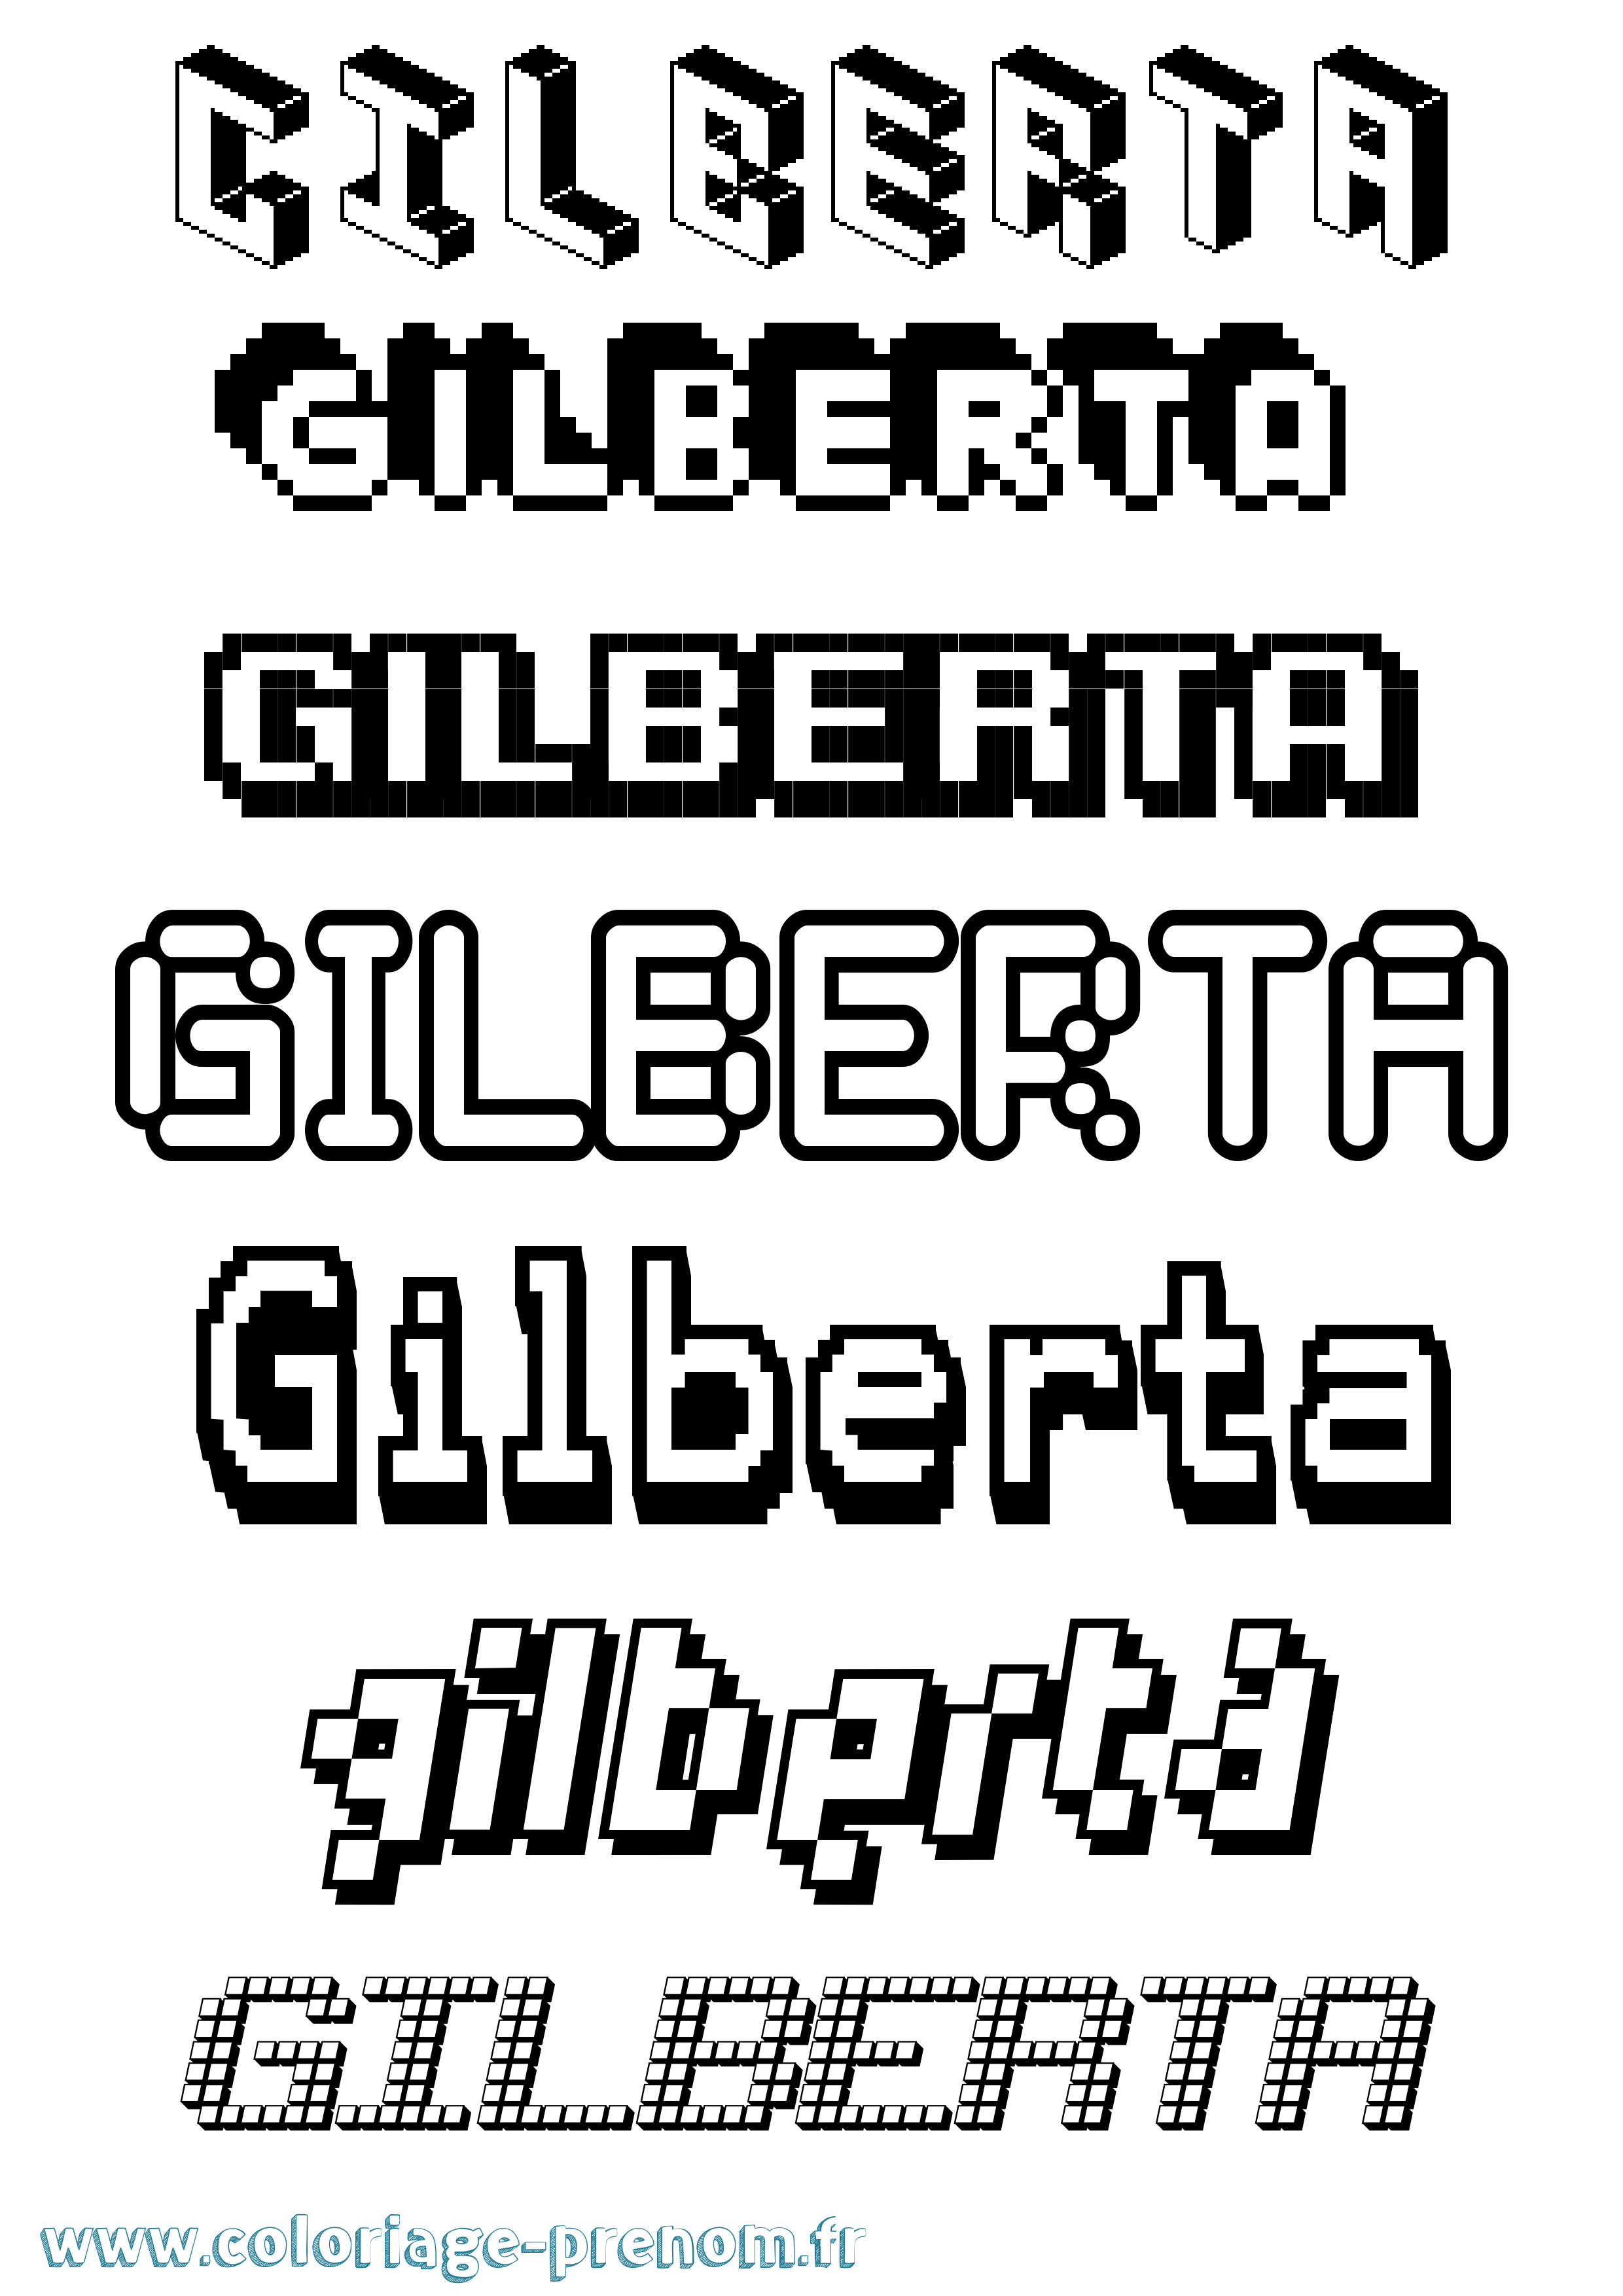 Coloriage prénom Gilberta Pixel